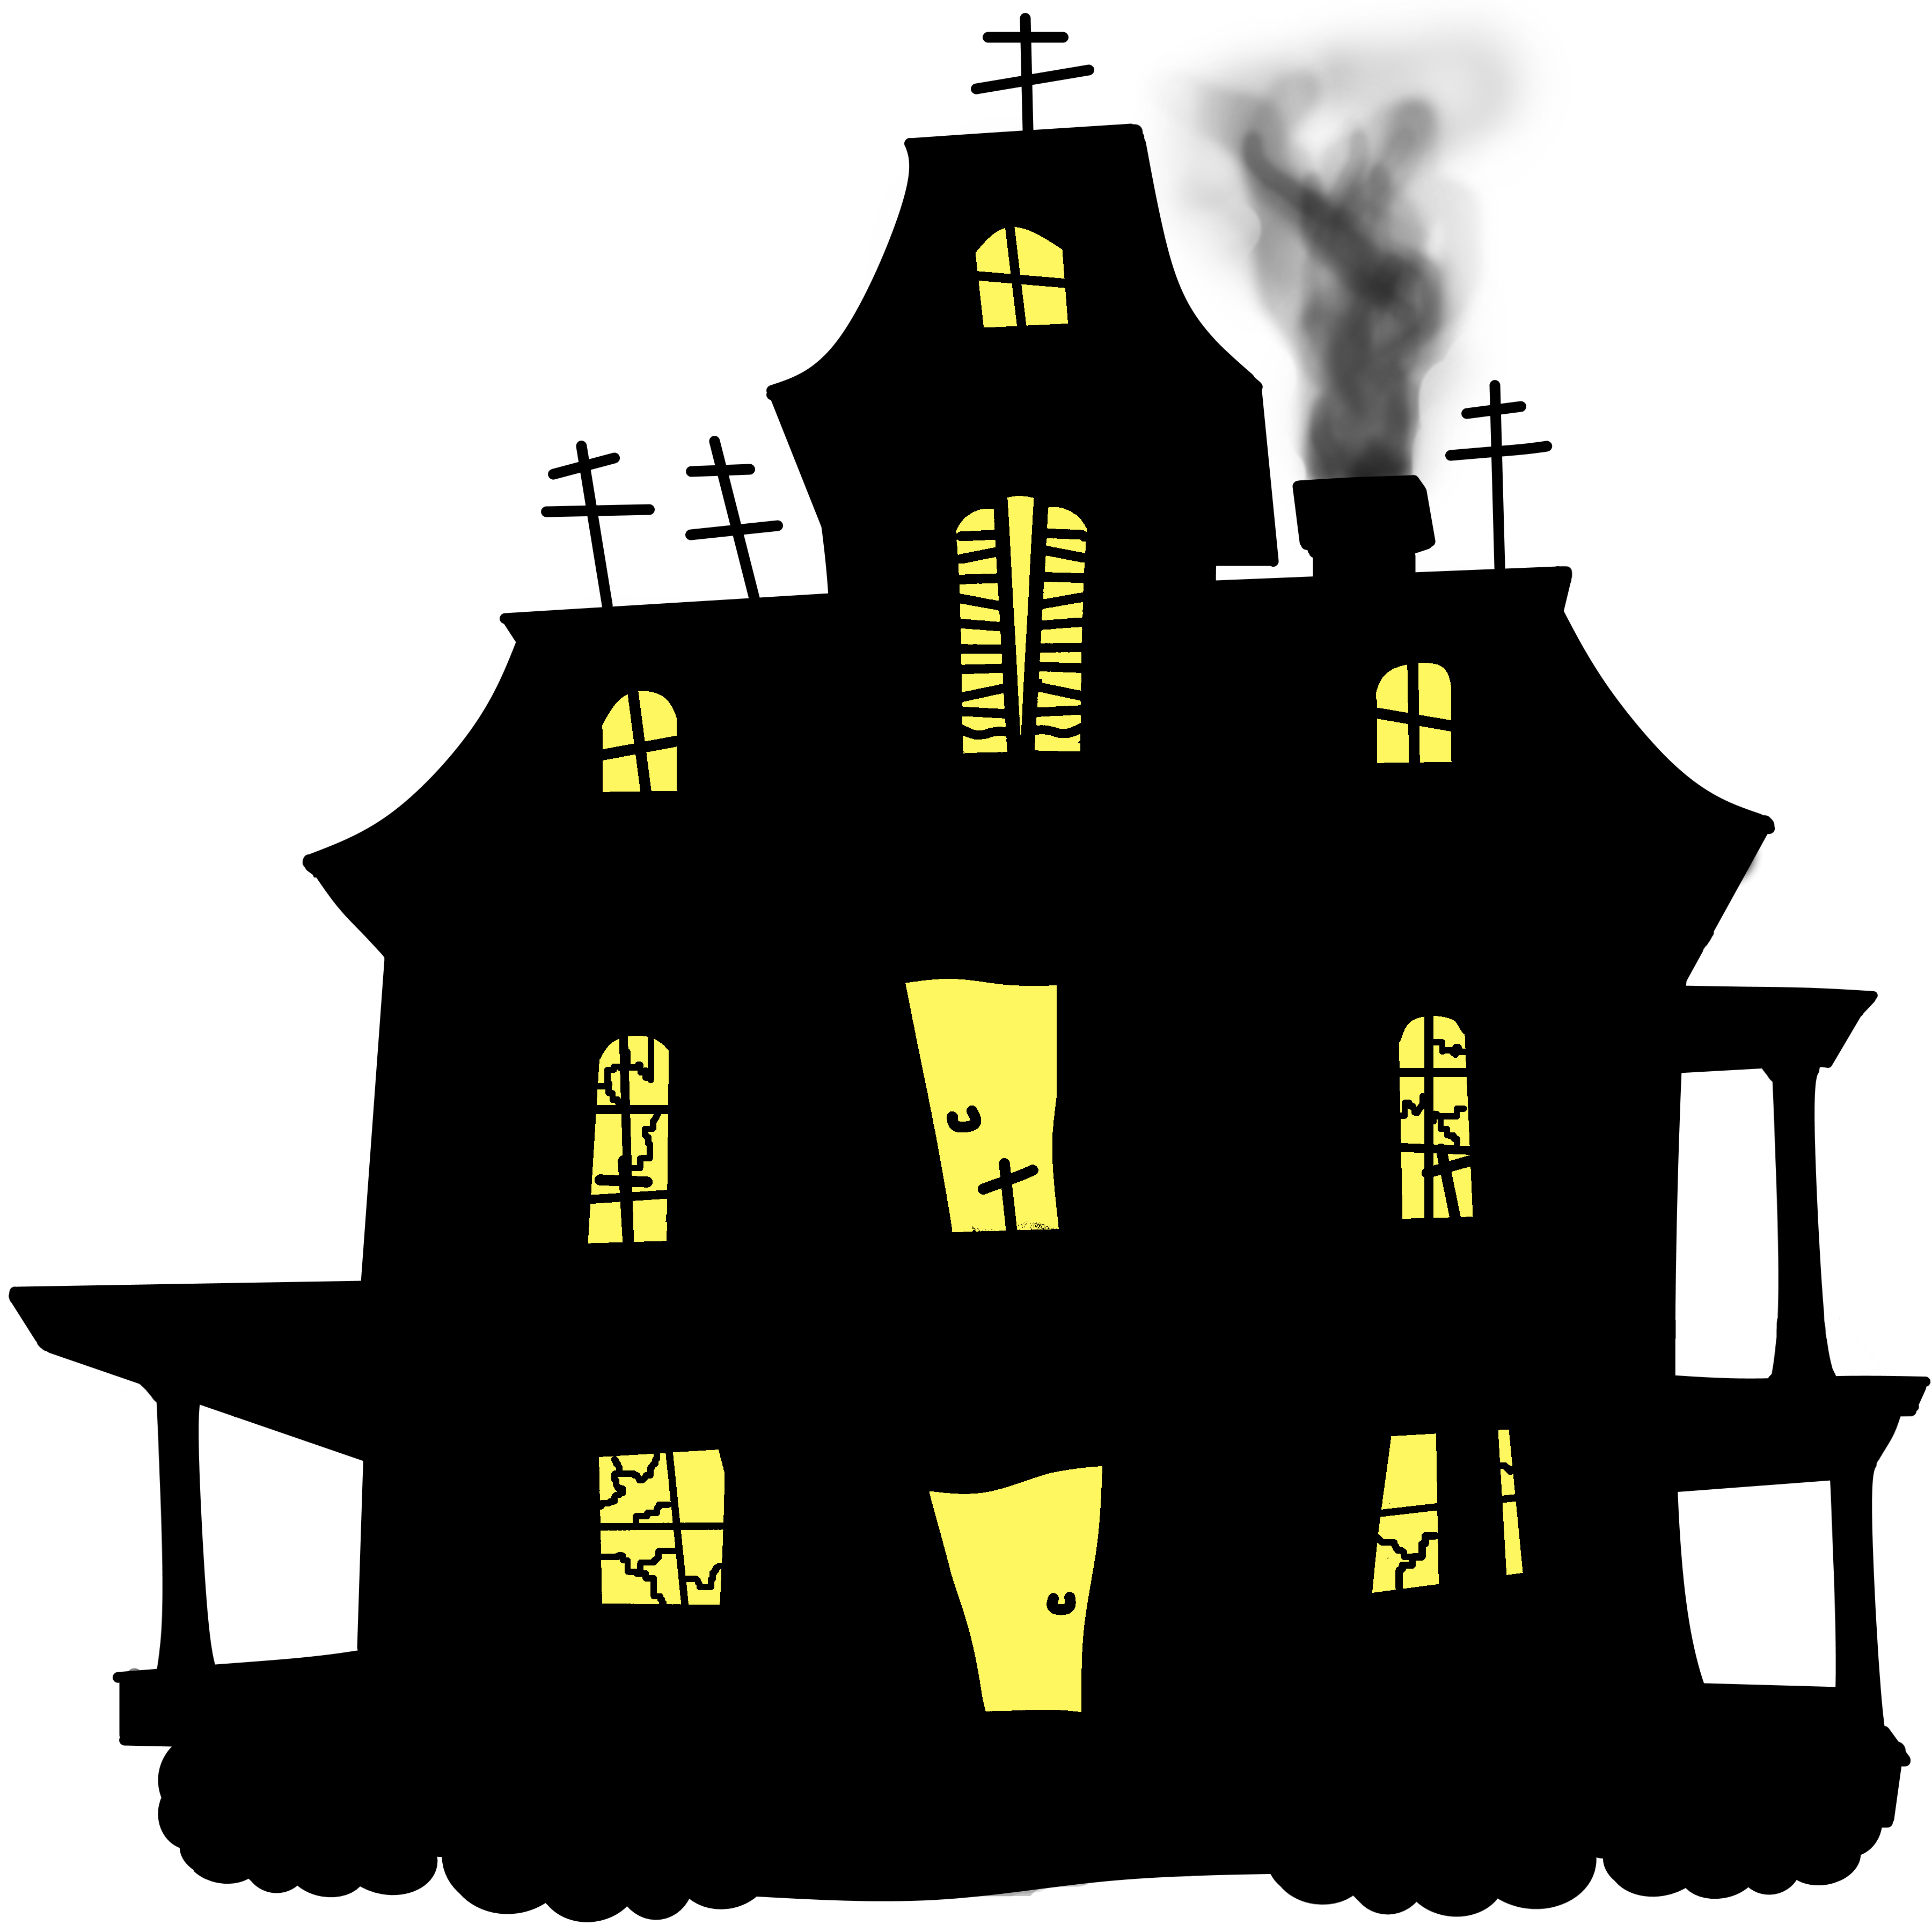 CM AC hauntedhouse silhouette